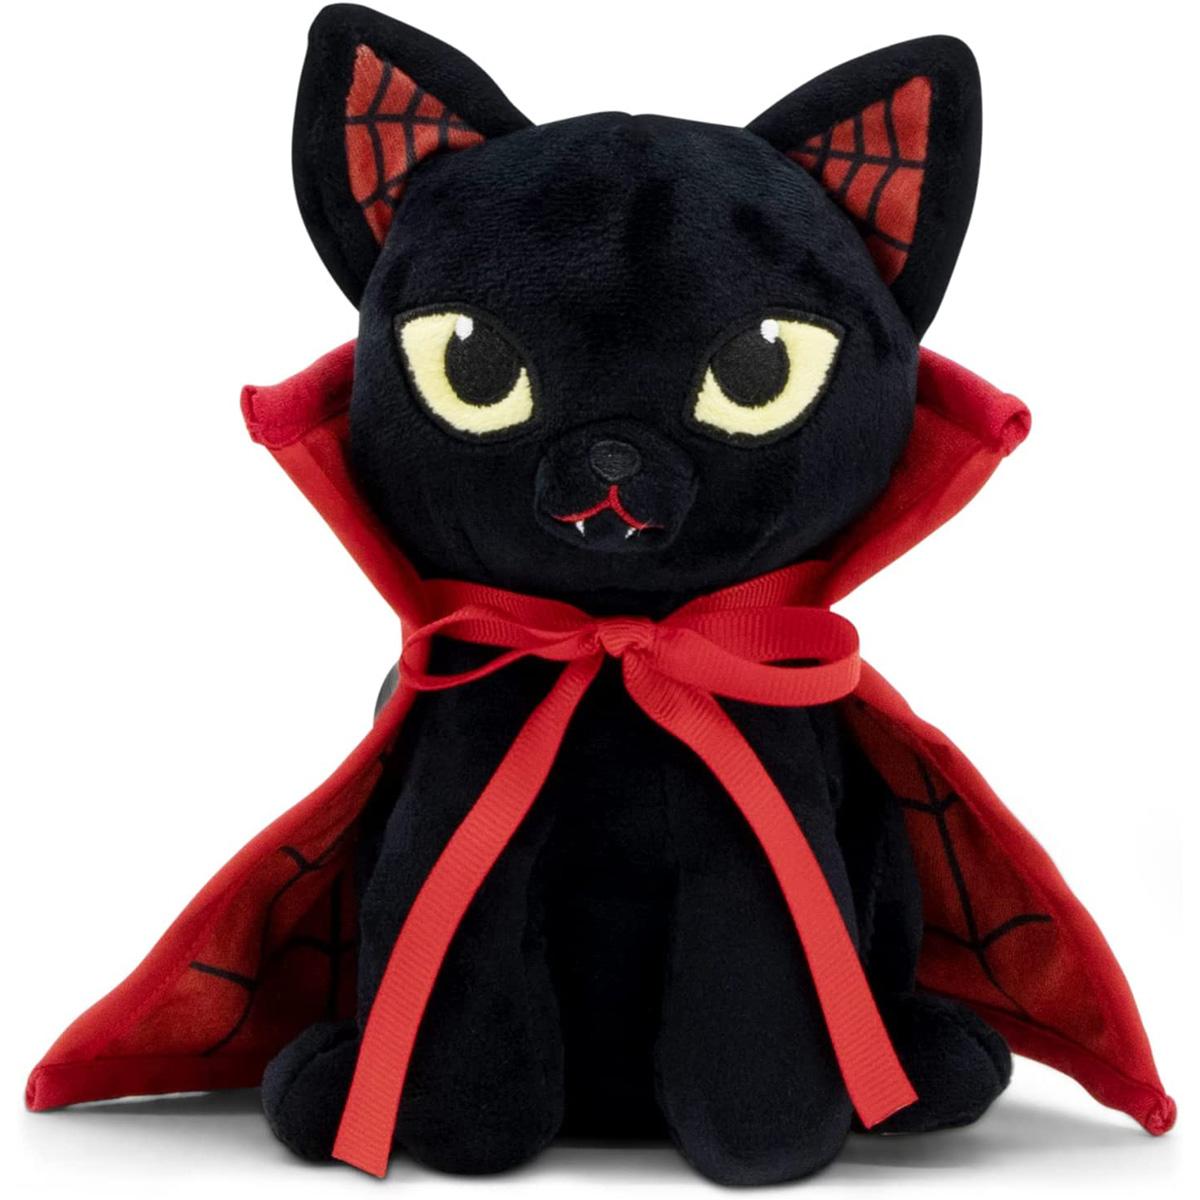 Plushible Halloween Black Vampire Cat Plushie for $10.99